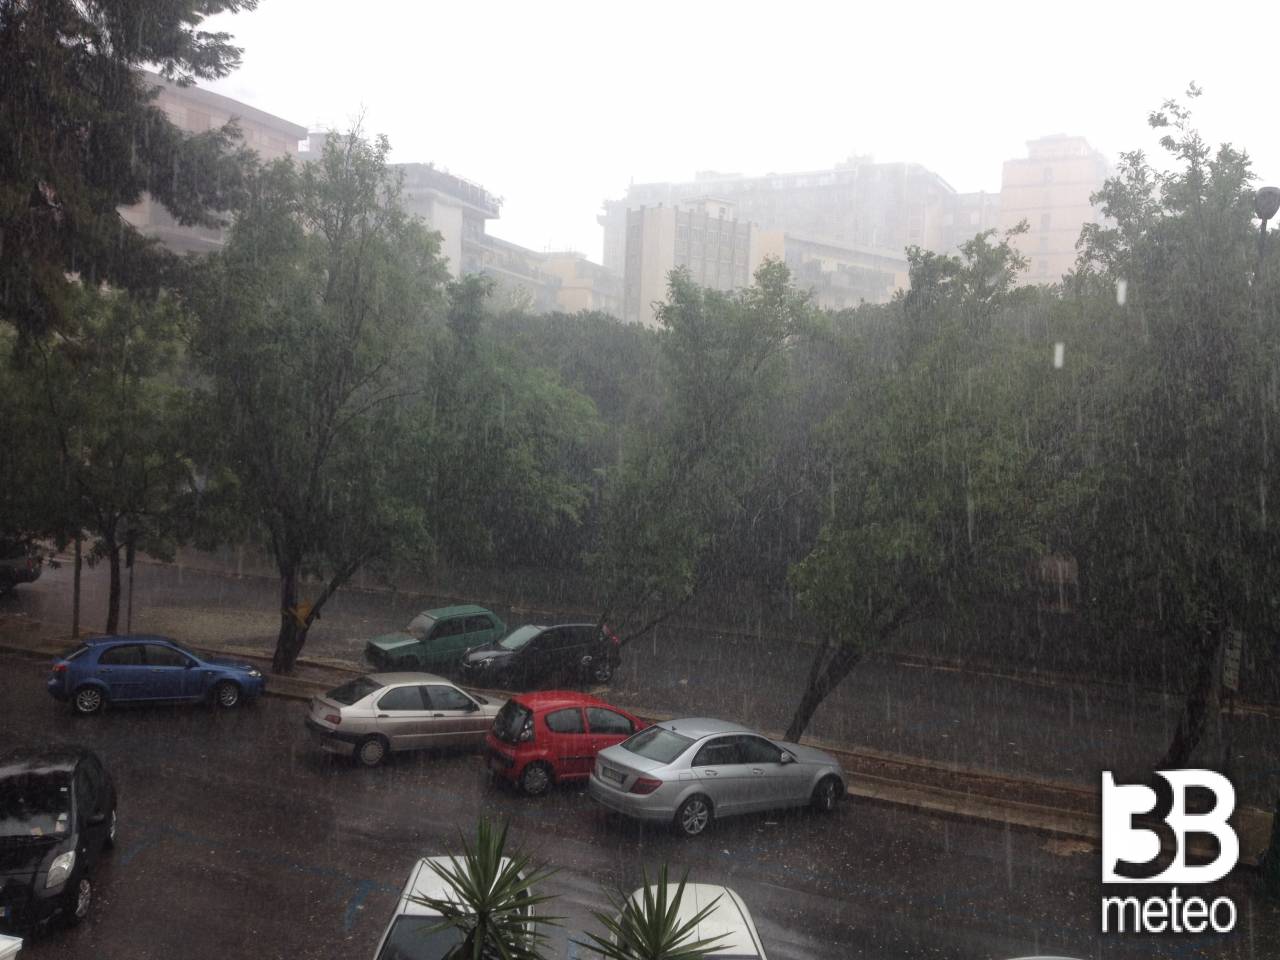 Meteo Verbania: lunedì piogge, poi bel tempo - 3bmeteo